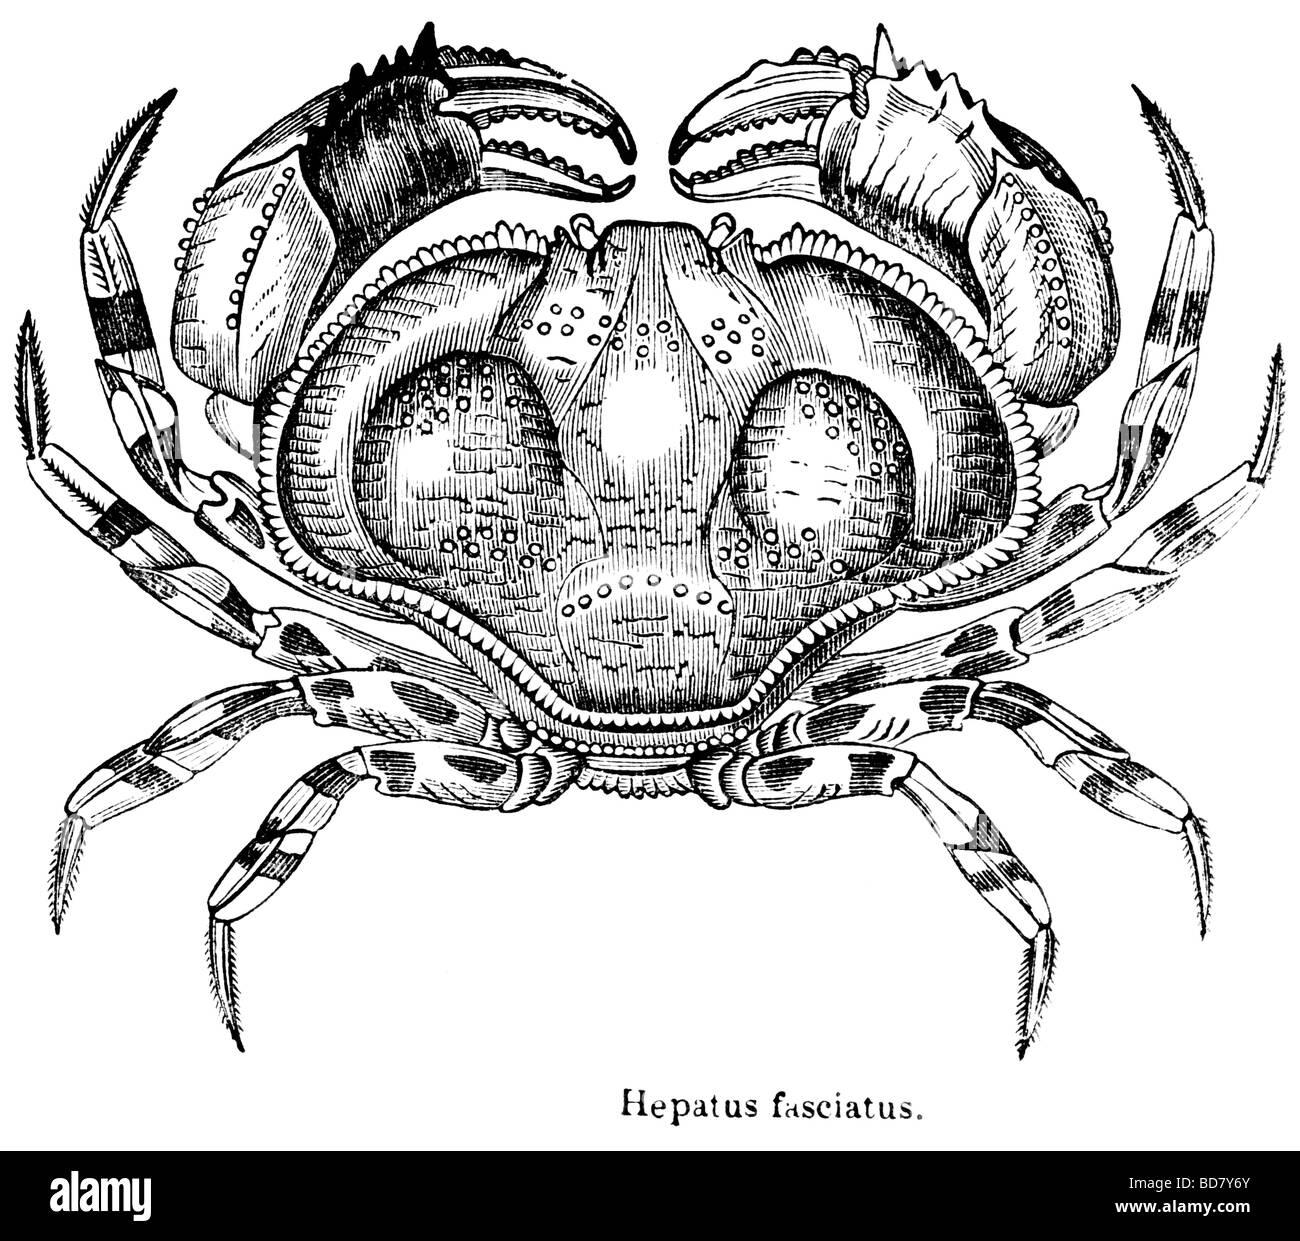 hepatus fasciatus Stock Photo